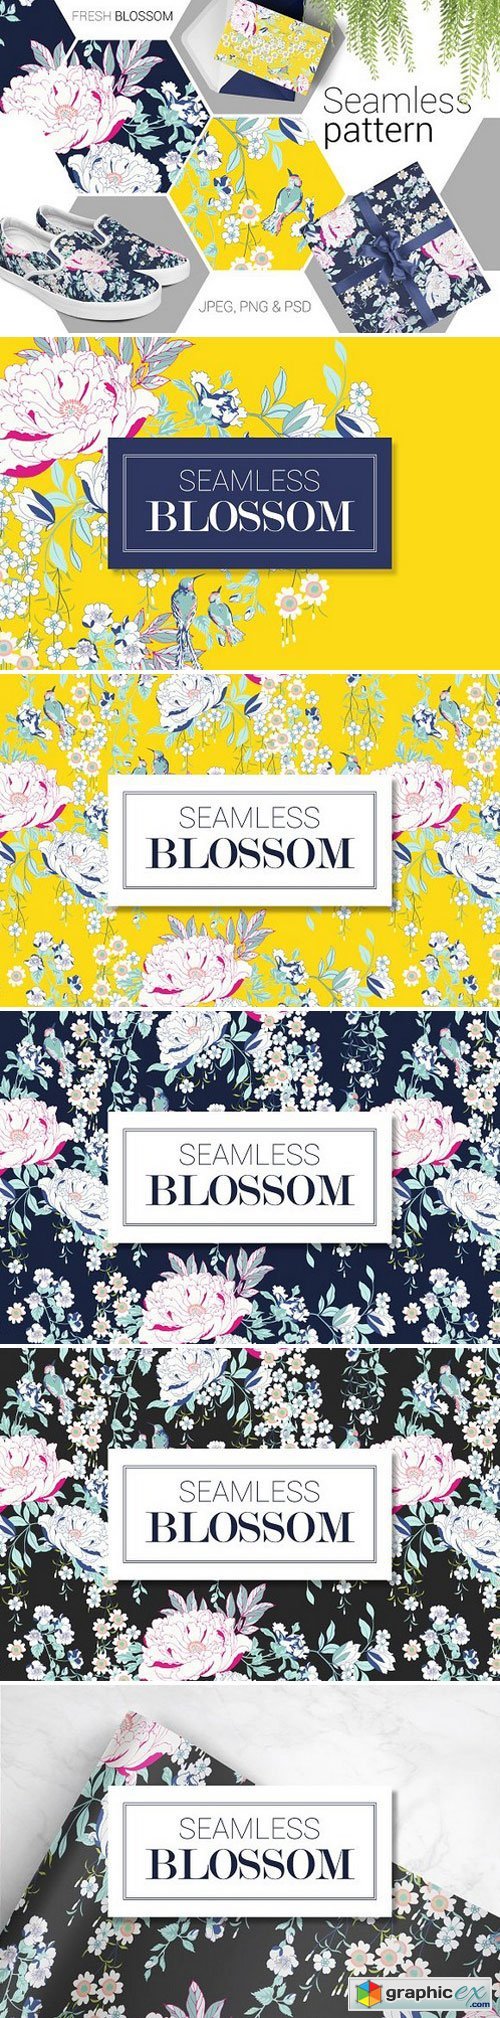 Fresh Blossom! Seamless Repeat